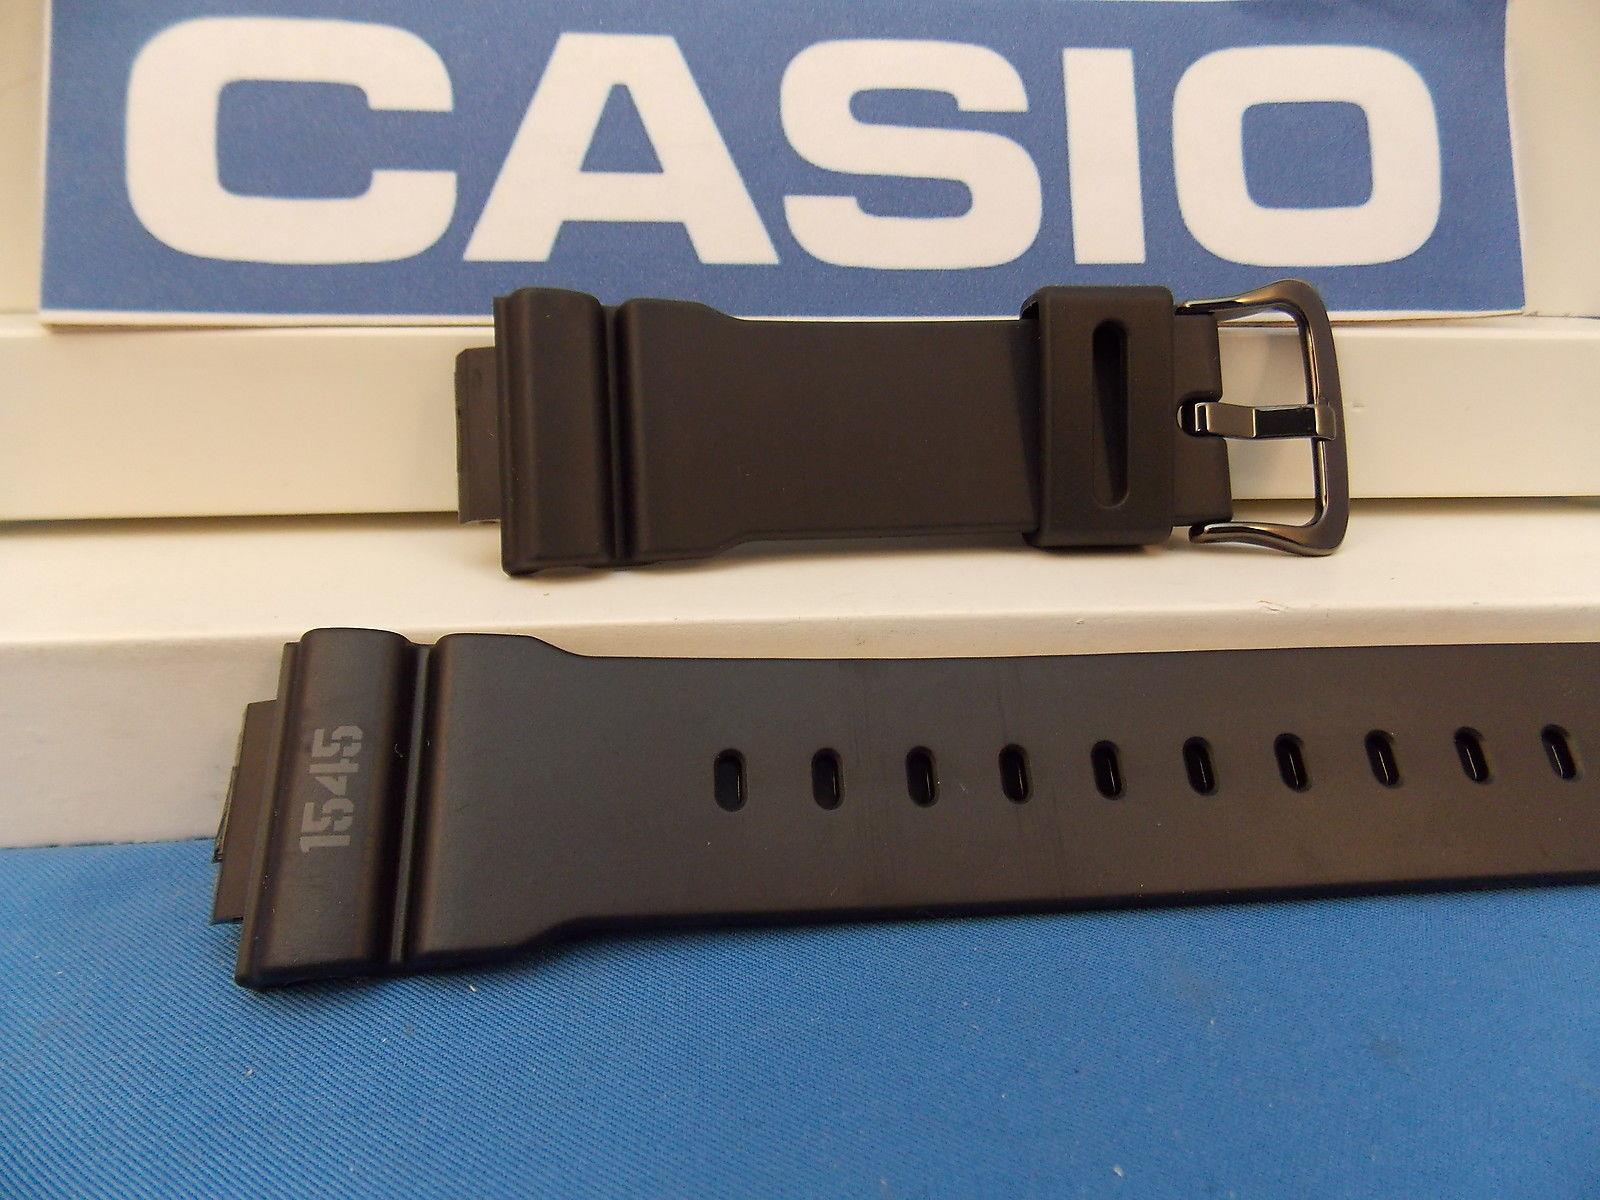 Casio watchband DW-5600 MS 1545, RZDW-5600 MS.  G-Shock Black Resin